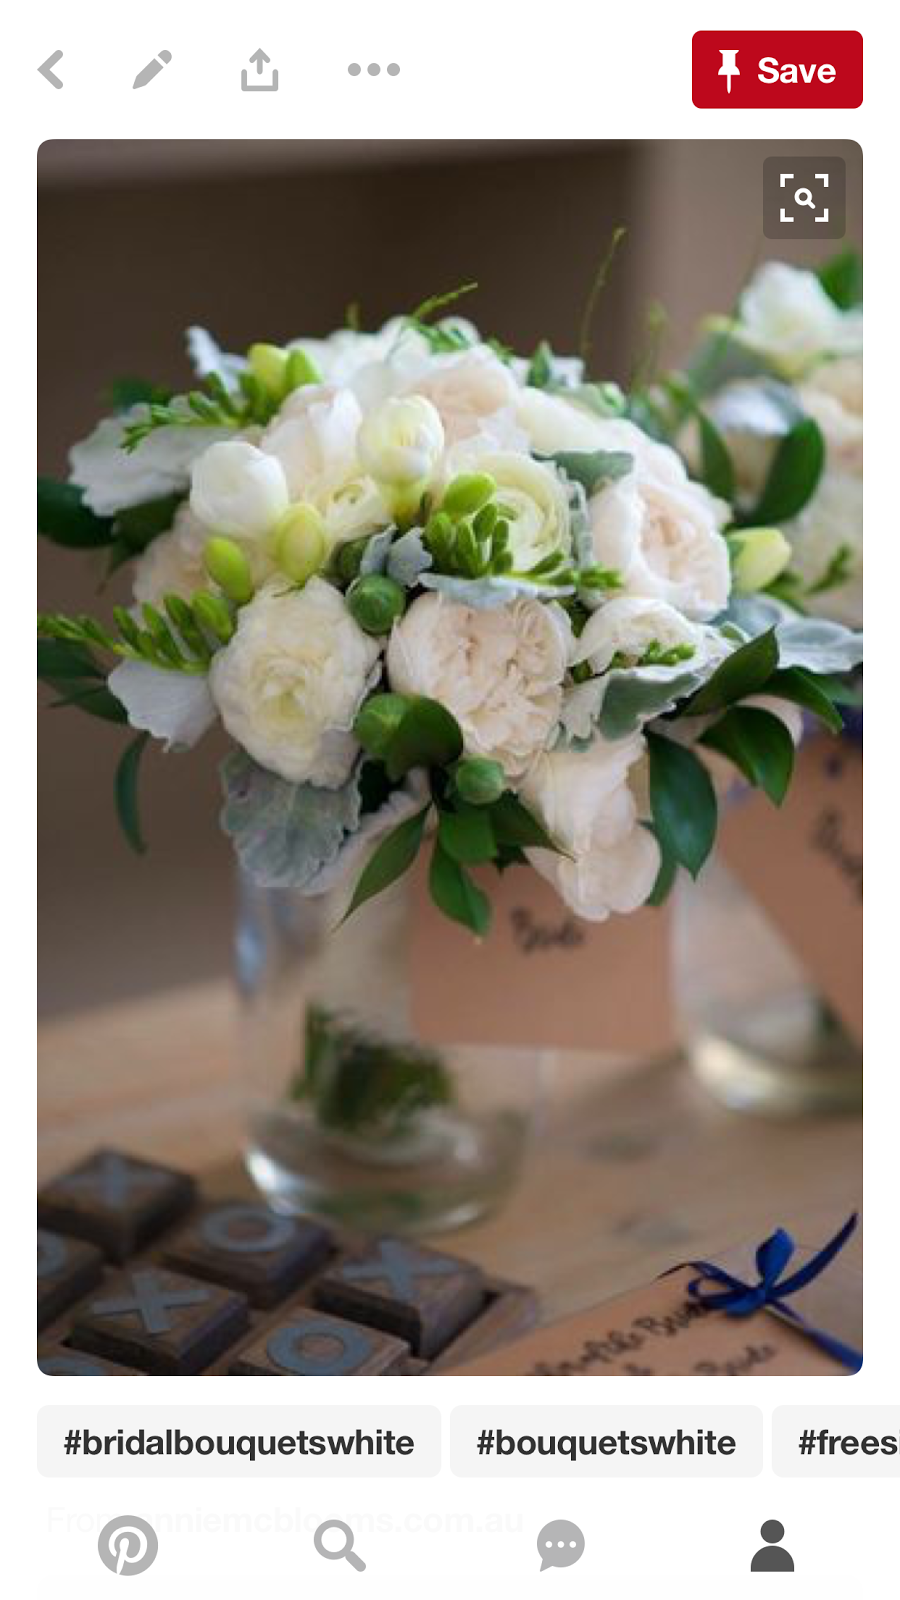 Annie McBlooms Wedding Florist | 8 Cormack Pl, Glendenning NSW 2761, Australia | Phone: 0404 199 624